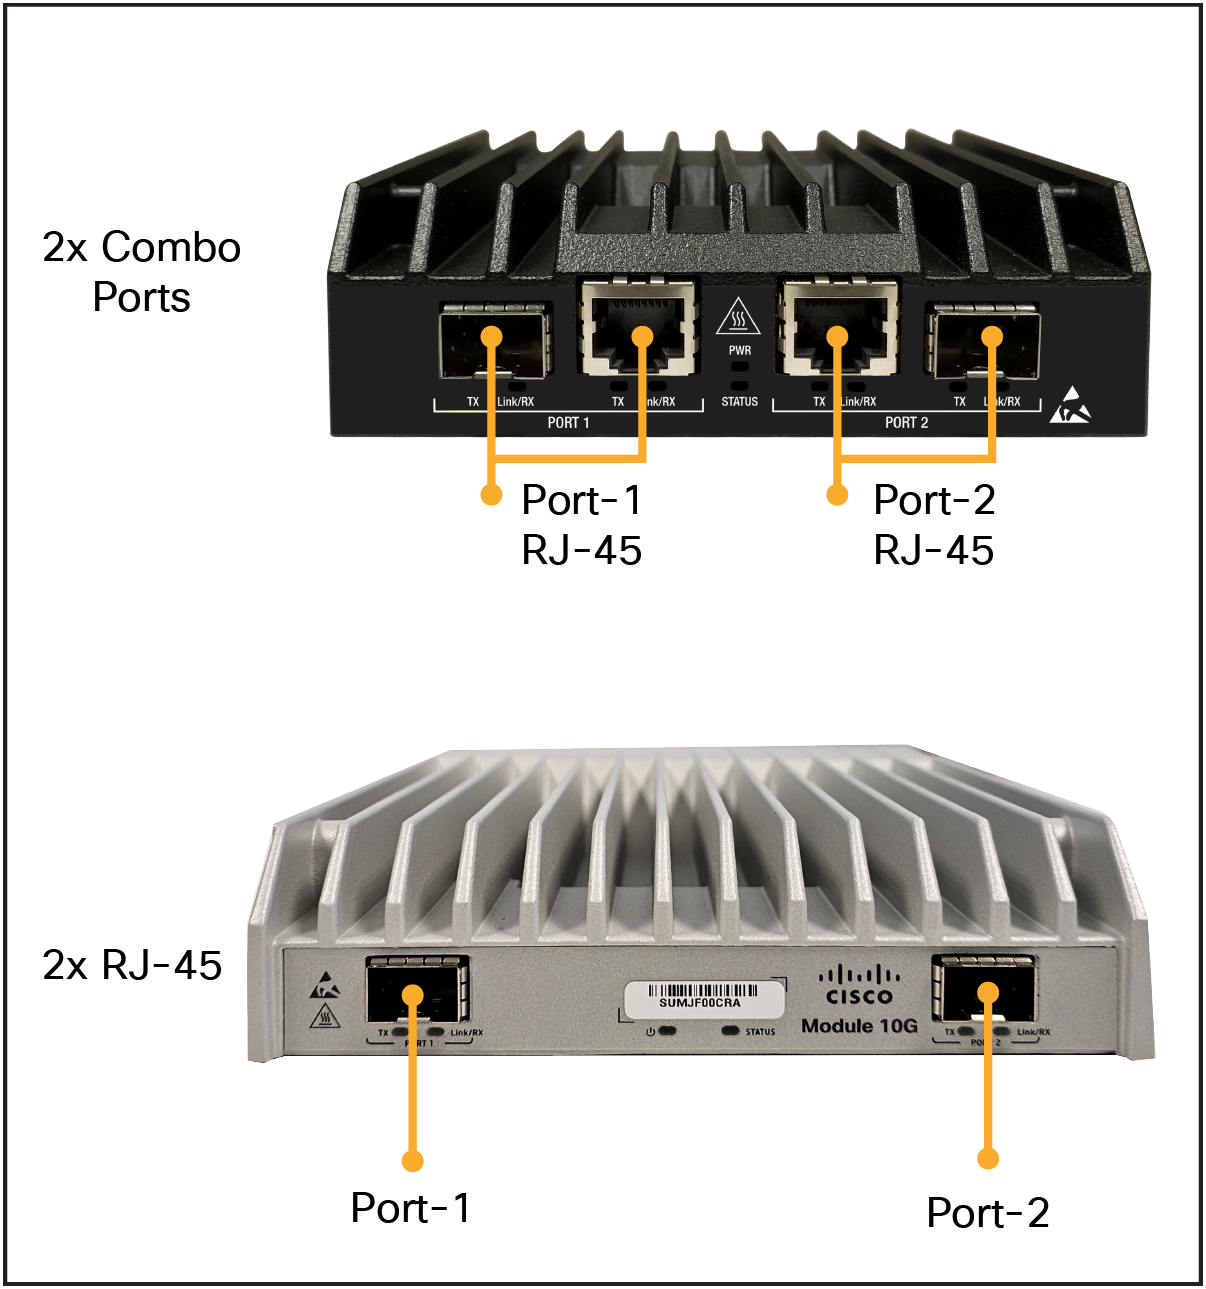 Cisco Provider Connectivity Assurance Sensor Module port specifications